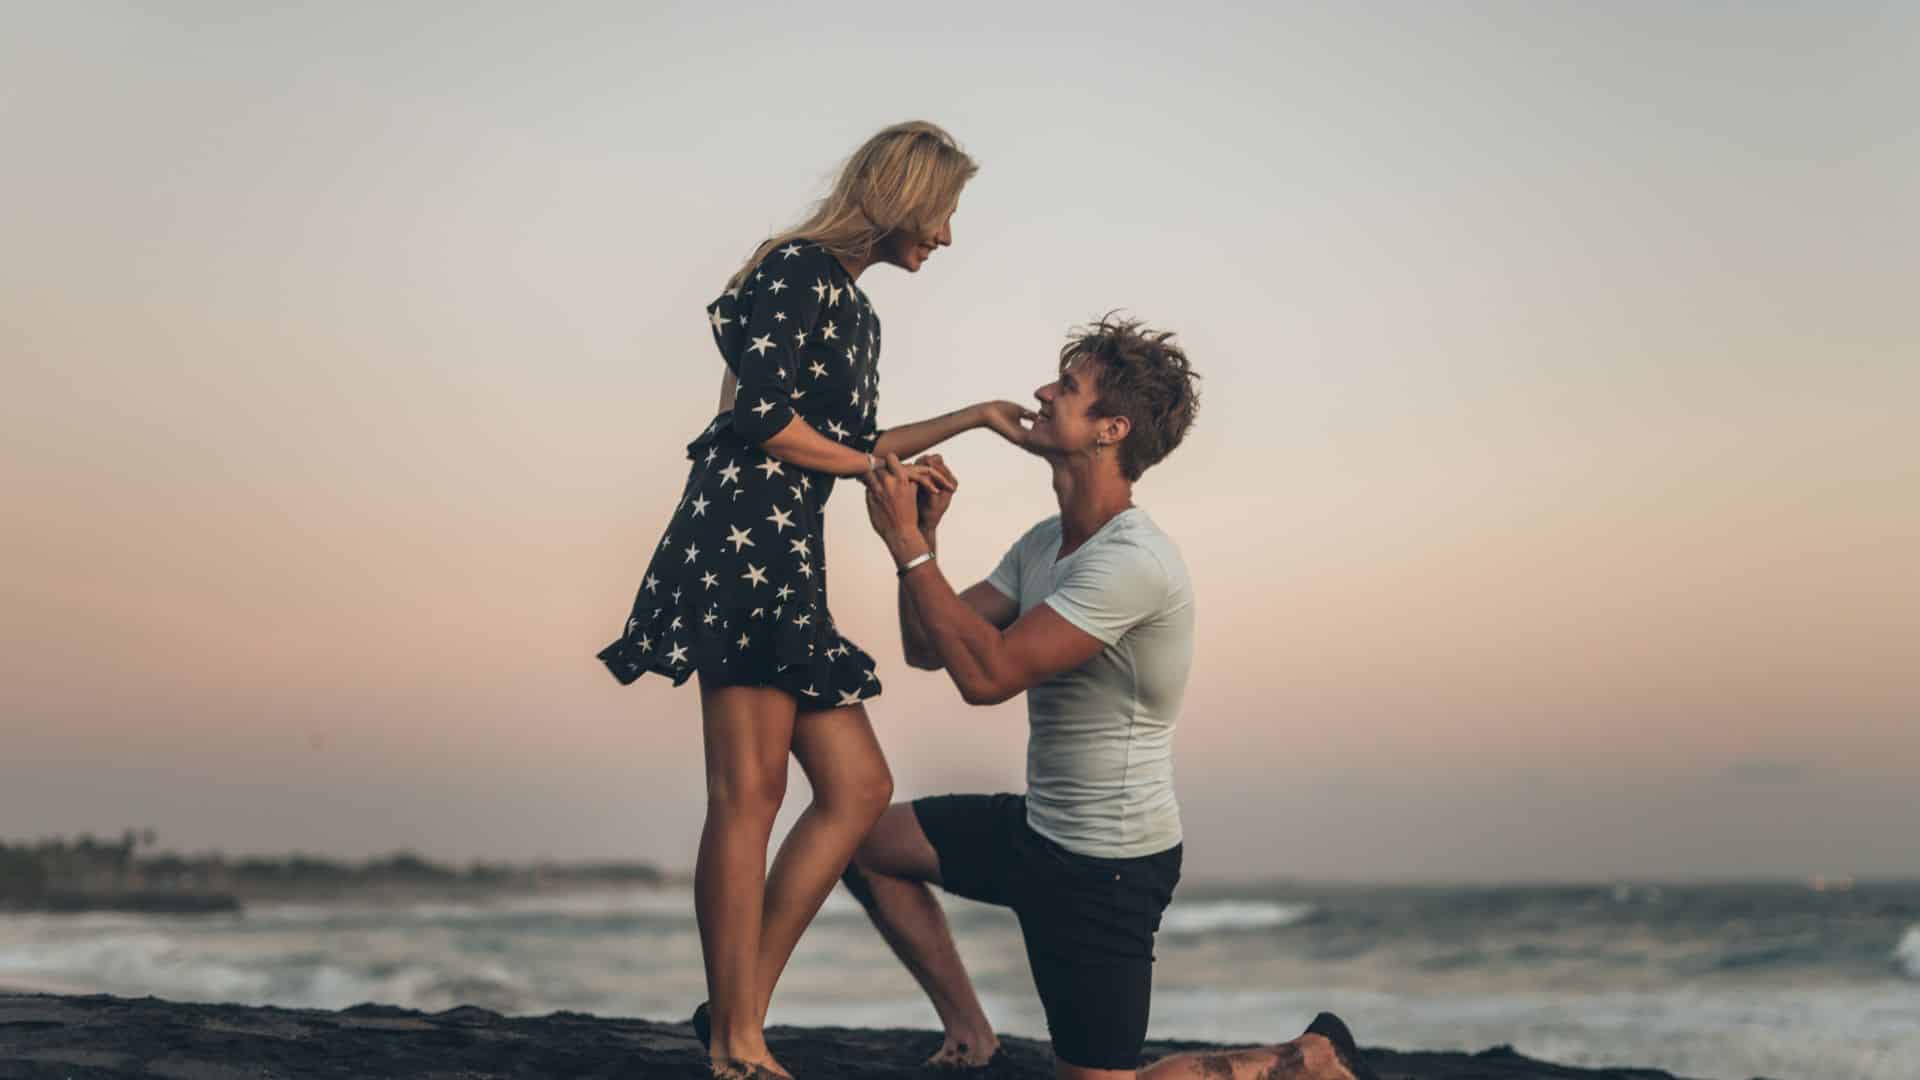 Man on beach proposing to woman